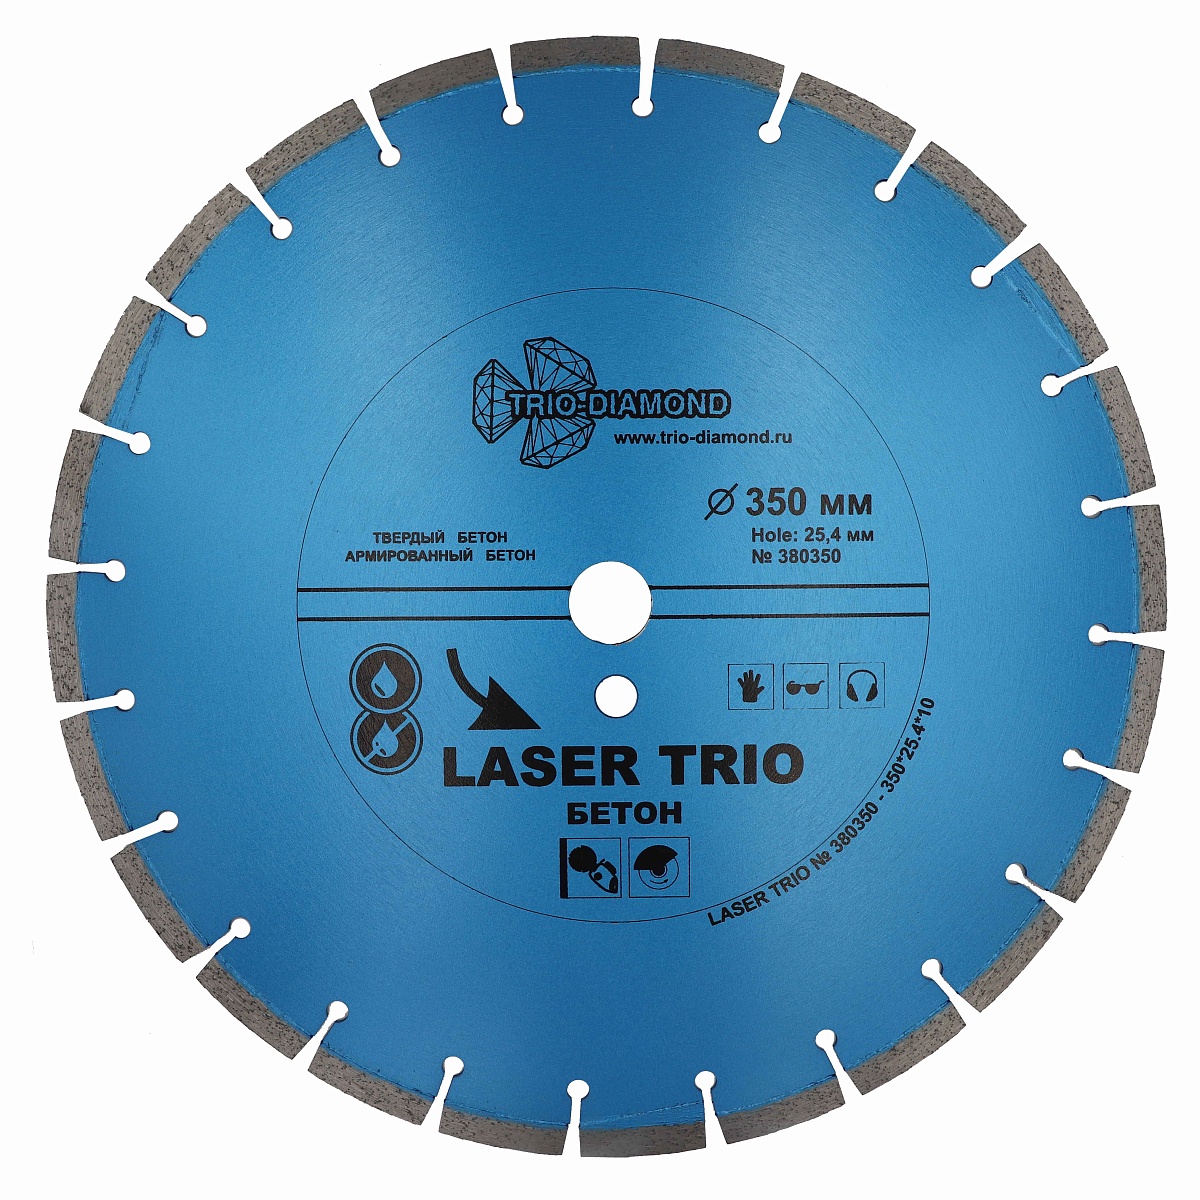 Trio-Diamond сегментный серия Laser Trio Бетон